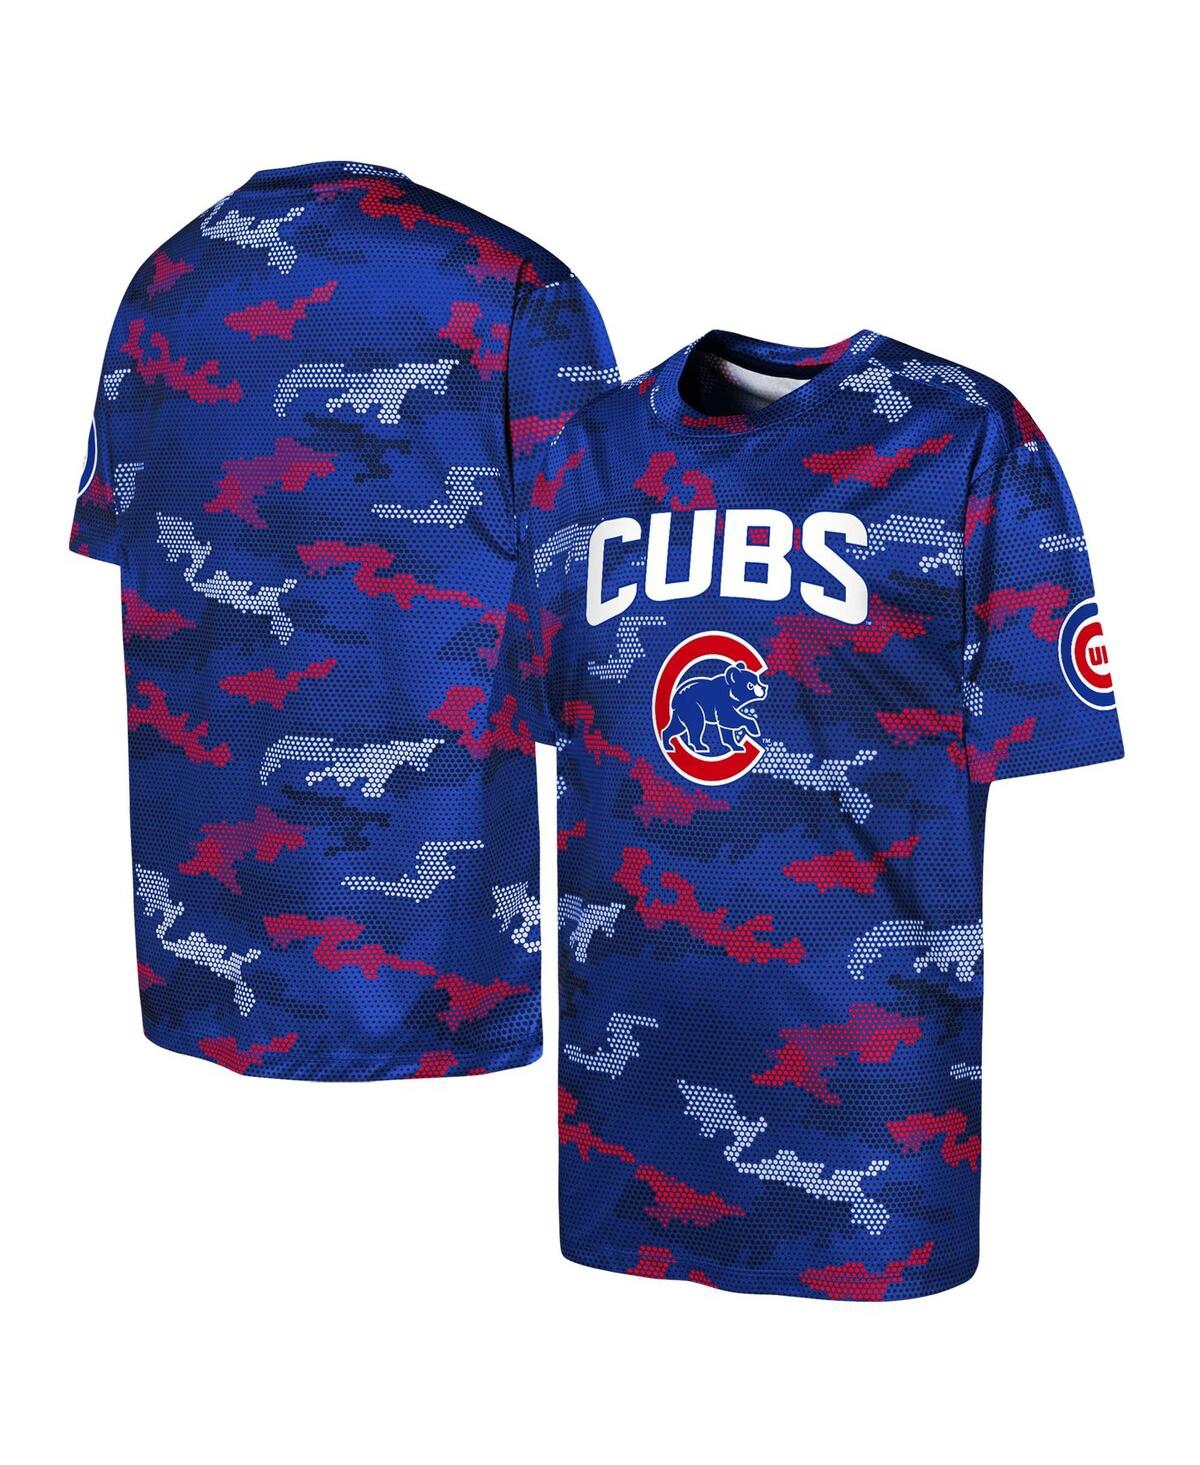 Outerstuff Kids' Big Boys Fanatics Royal Chicago Cubs Trainer Tech T-shirt